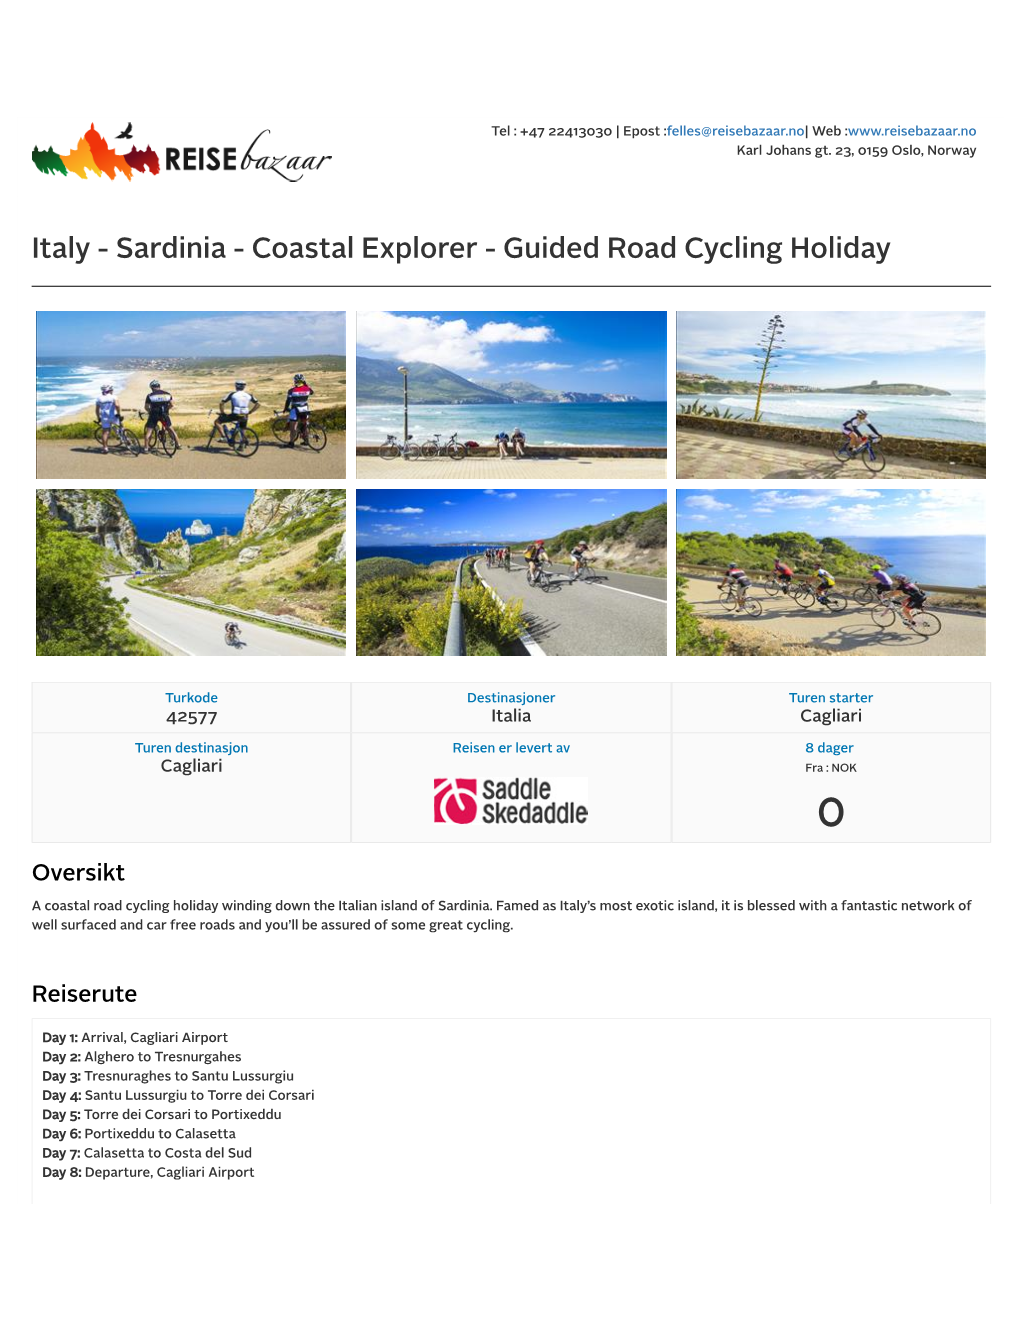 Sardinia - Coastal Explorer - Guided Road Cycling Holiday